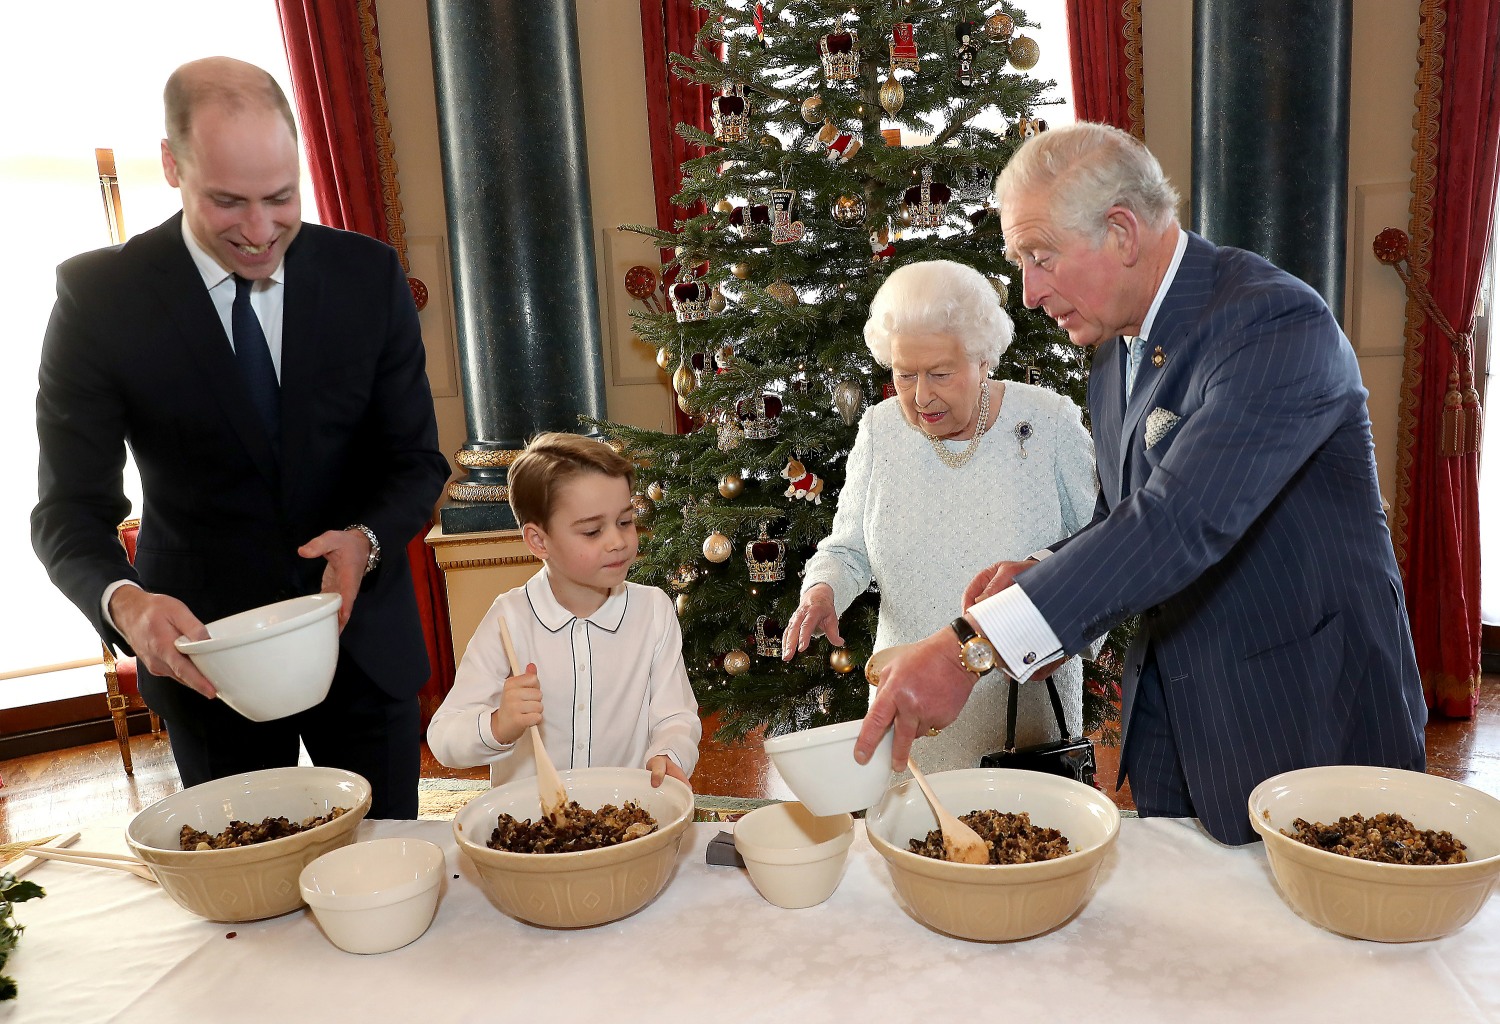 Christmas at Buckingham Palace